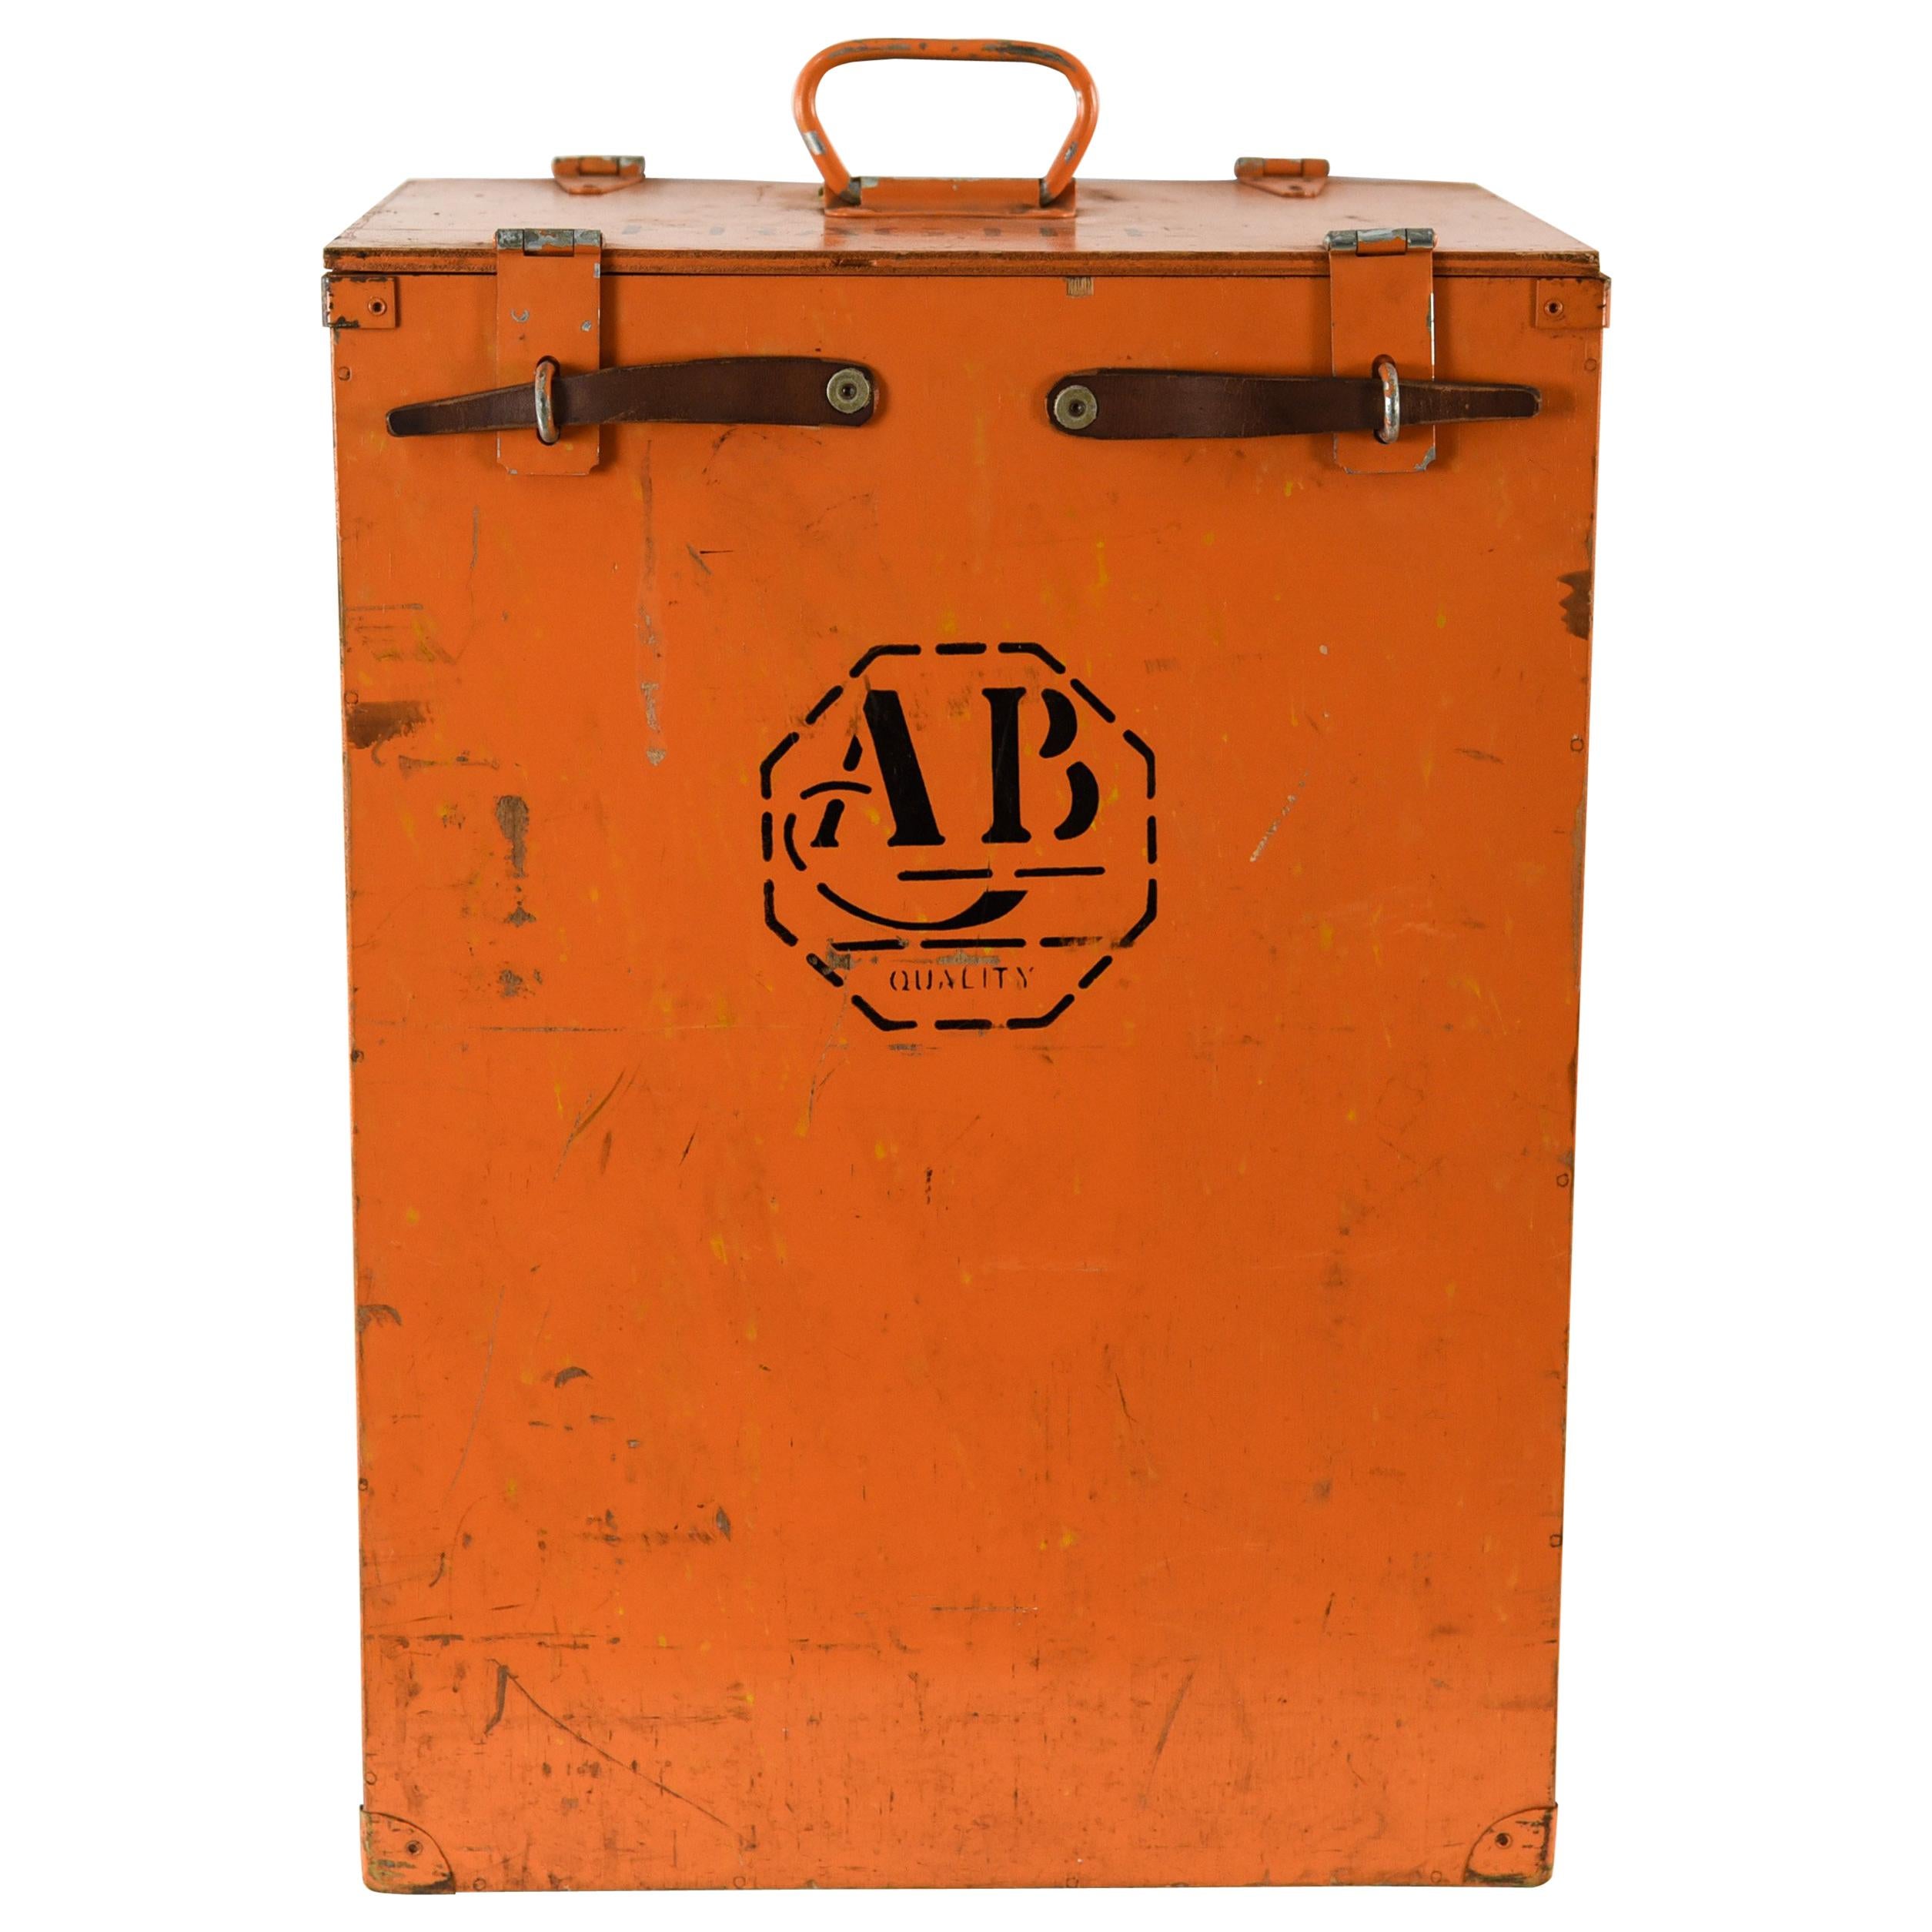 Vintage Allen Bradley Industrial Case